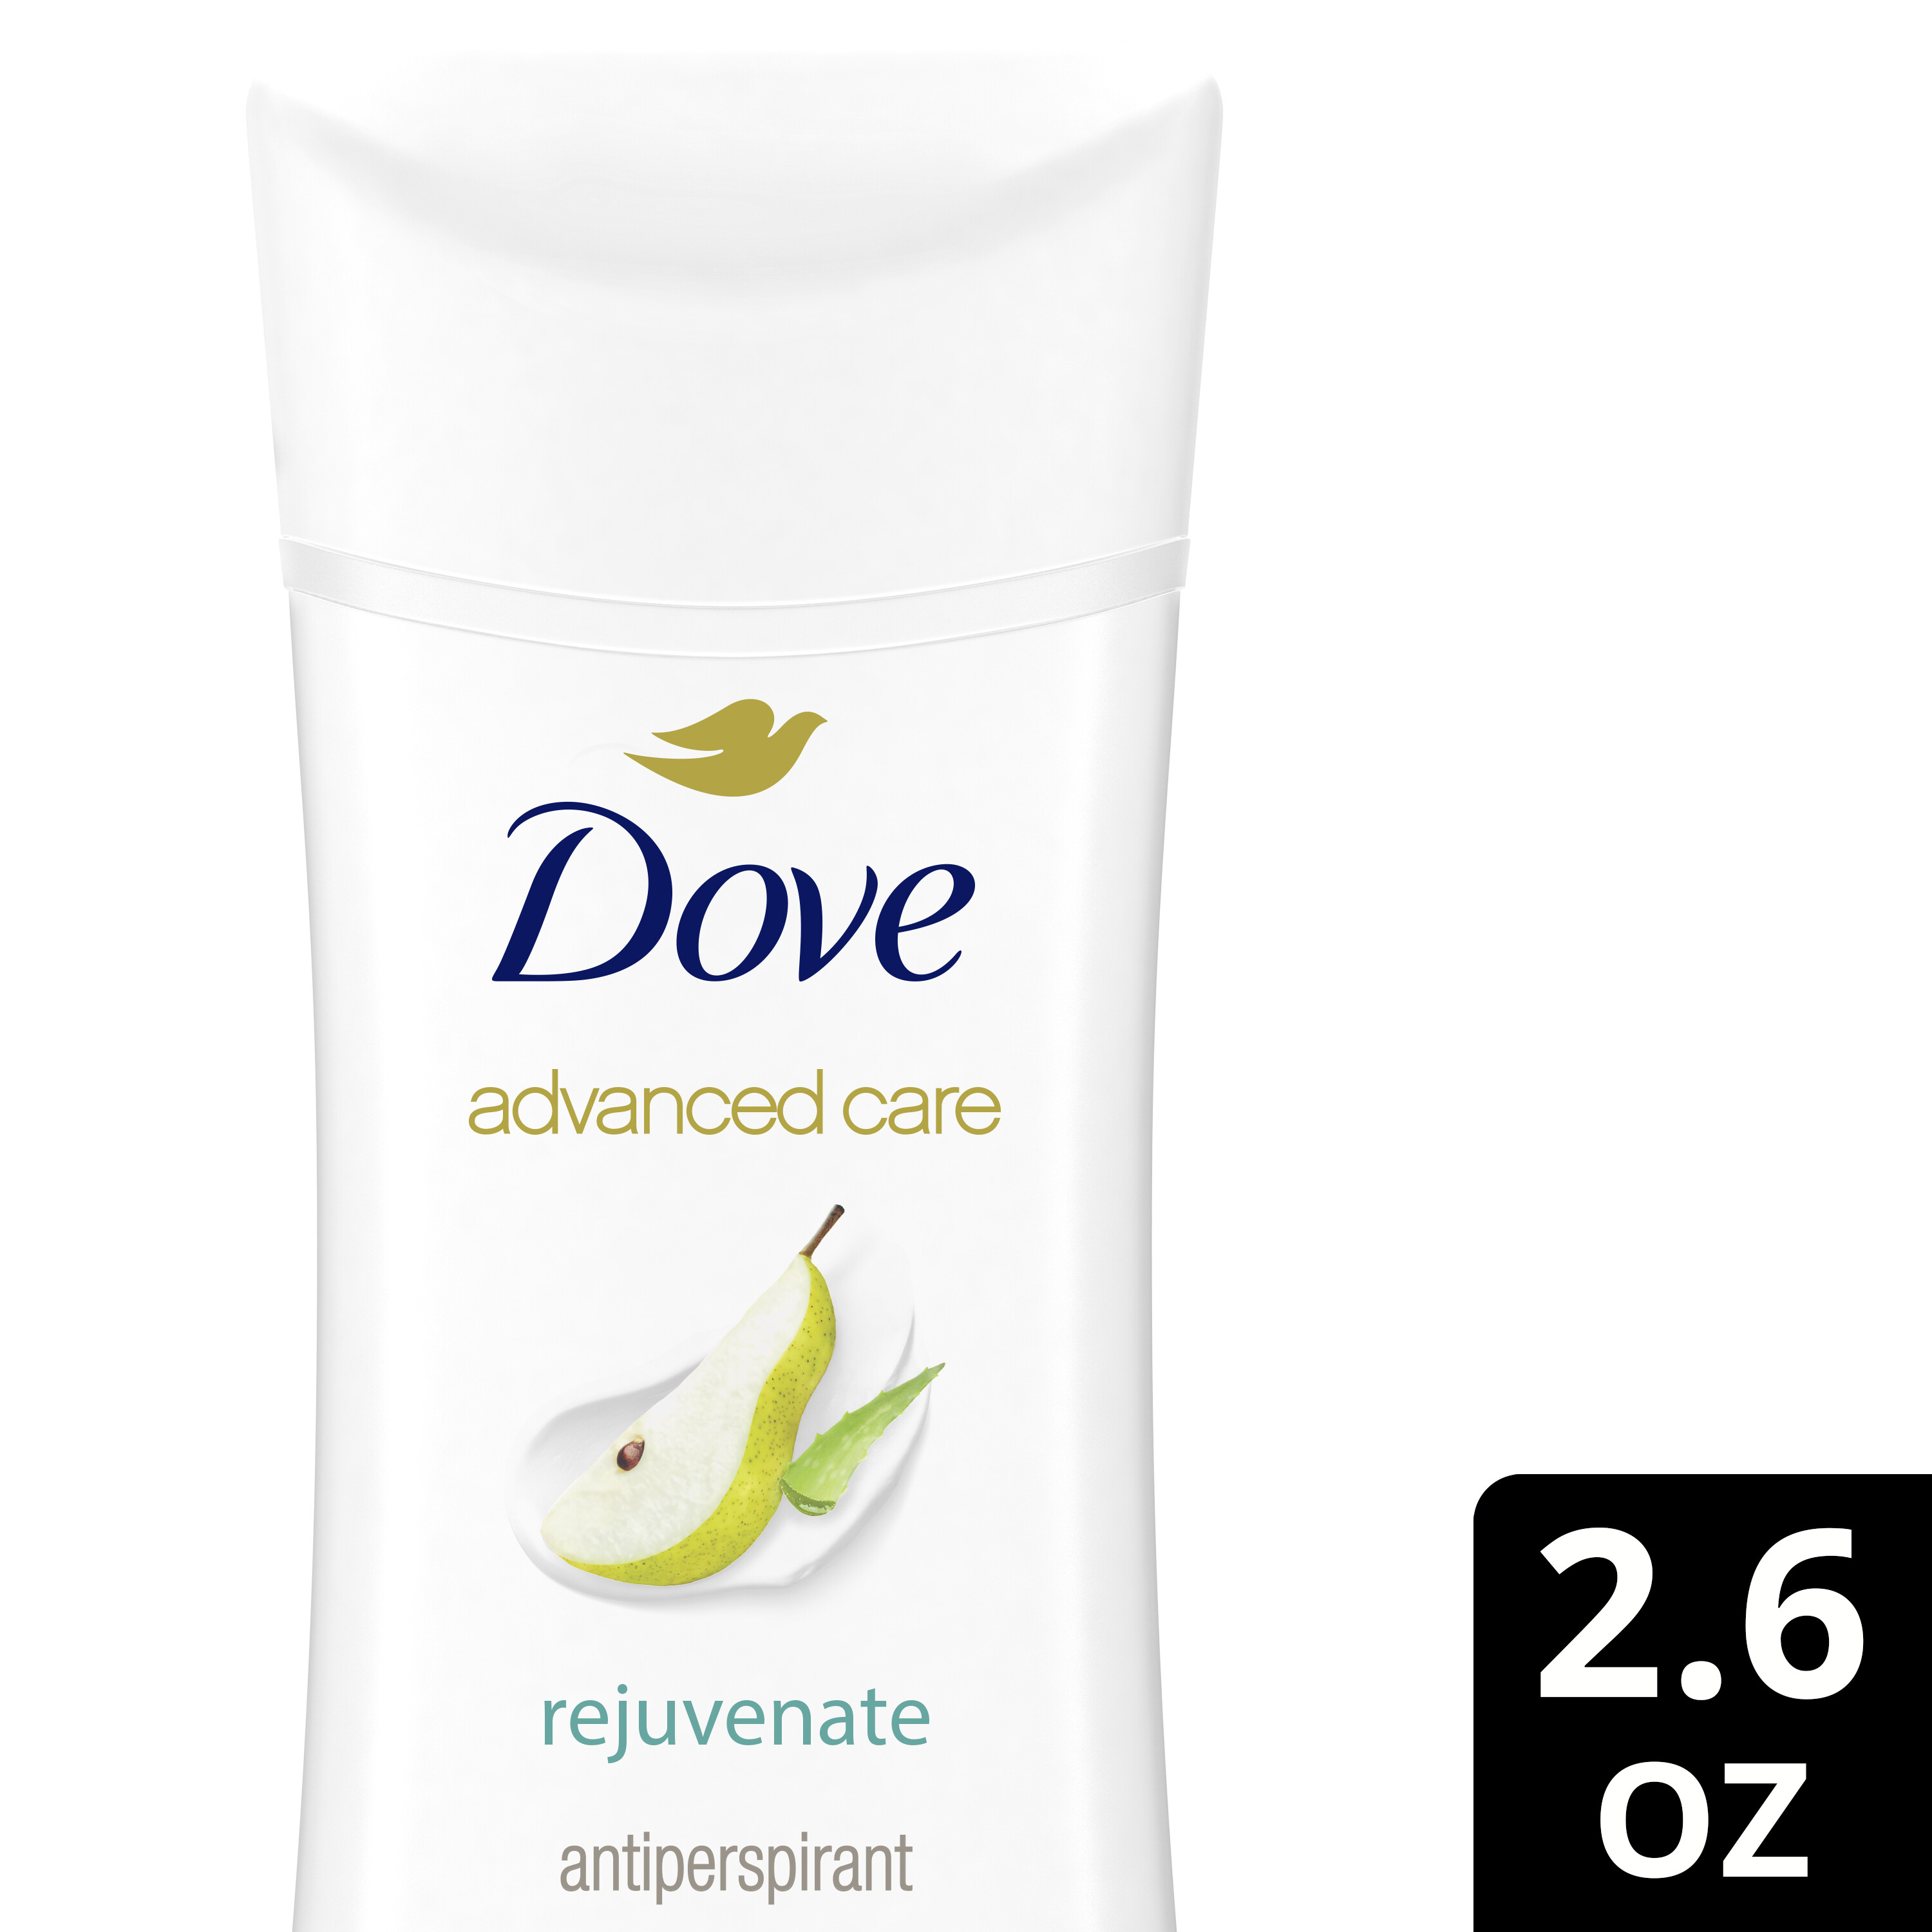 Dove Advanced Care Women's Antiperspirant Deodorant Stick, Rejuvenate Delicate Jasmine Scent, 2.6 oz - image 2 of 10